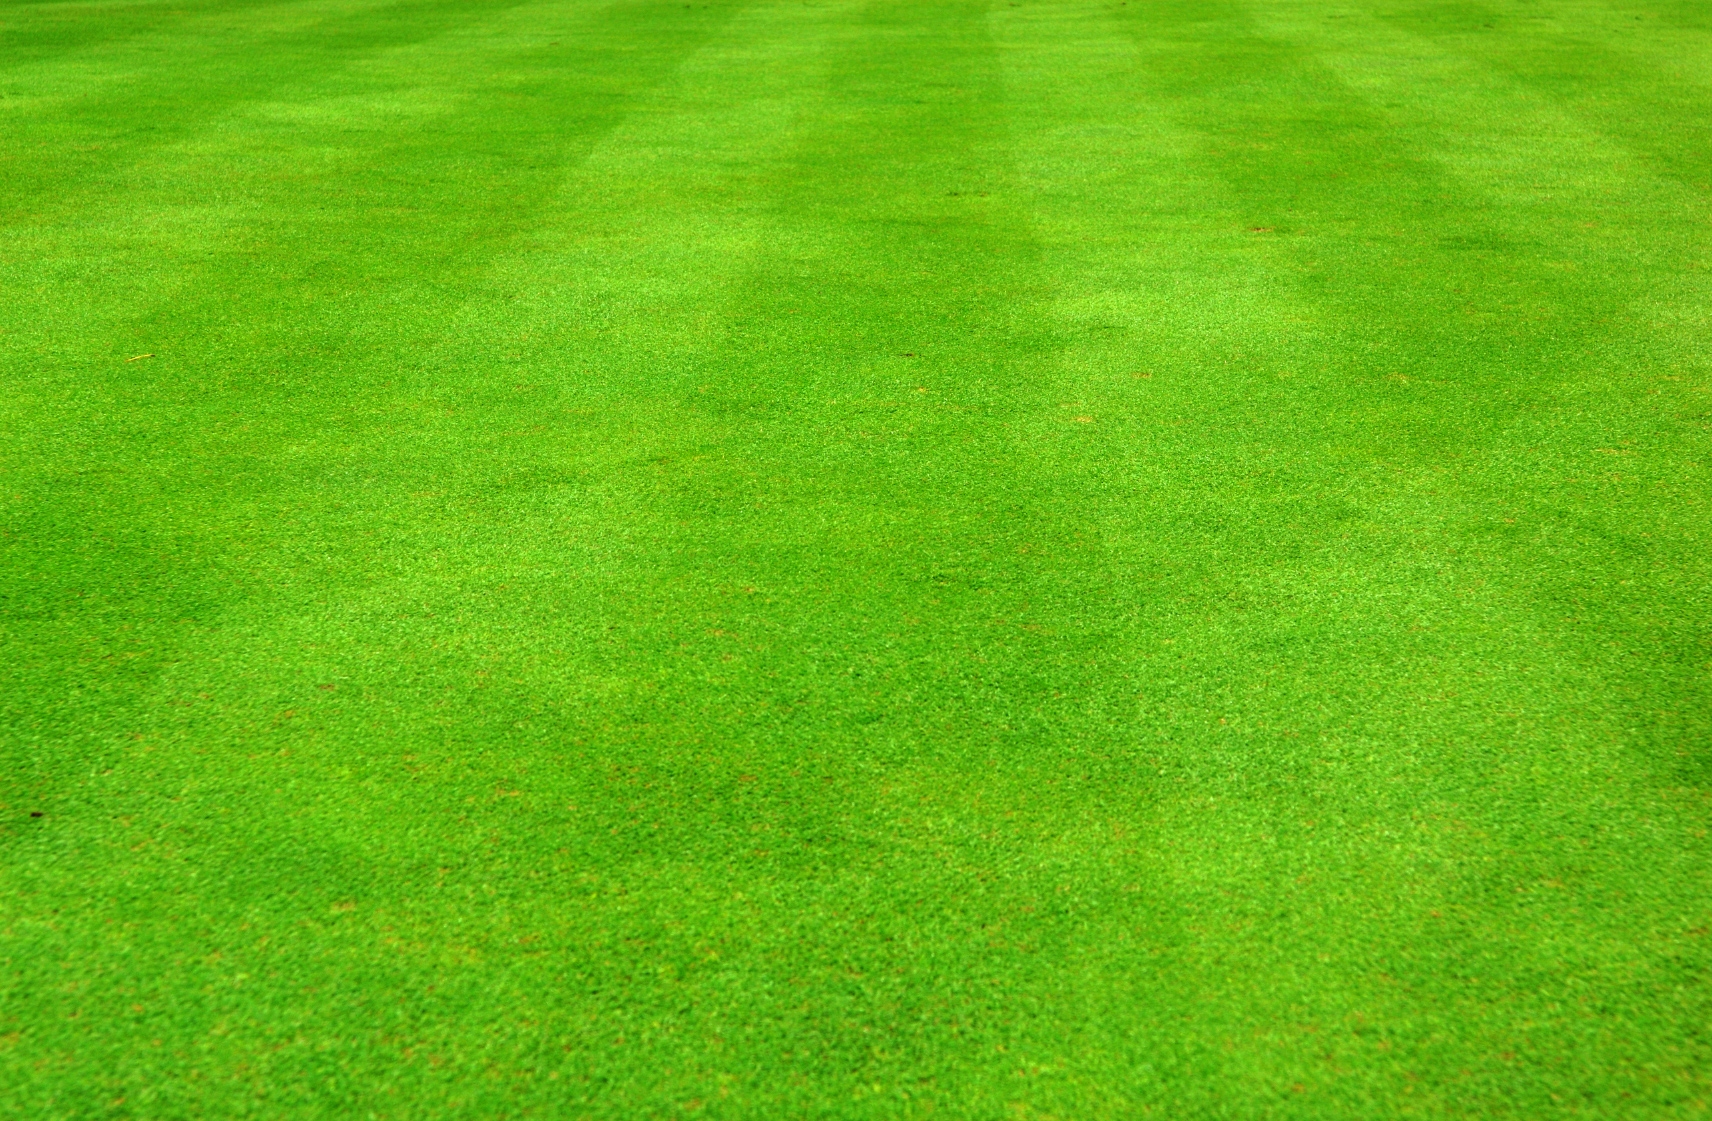 Field clipart grassy area. Free grass cliparts download